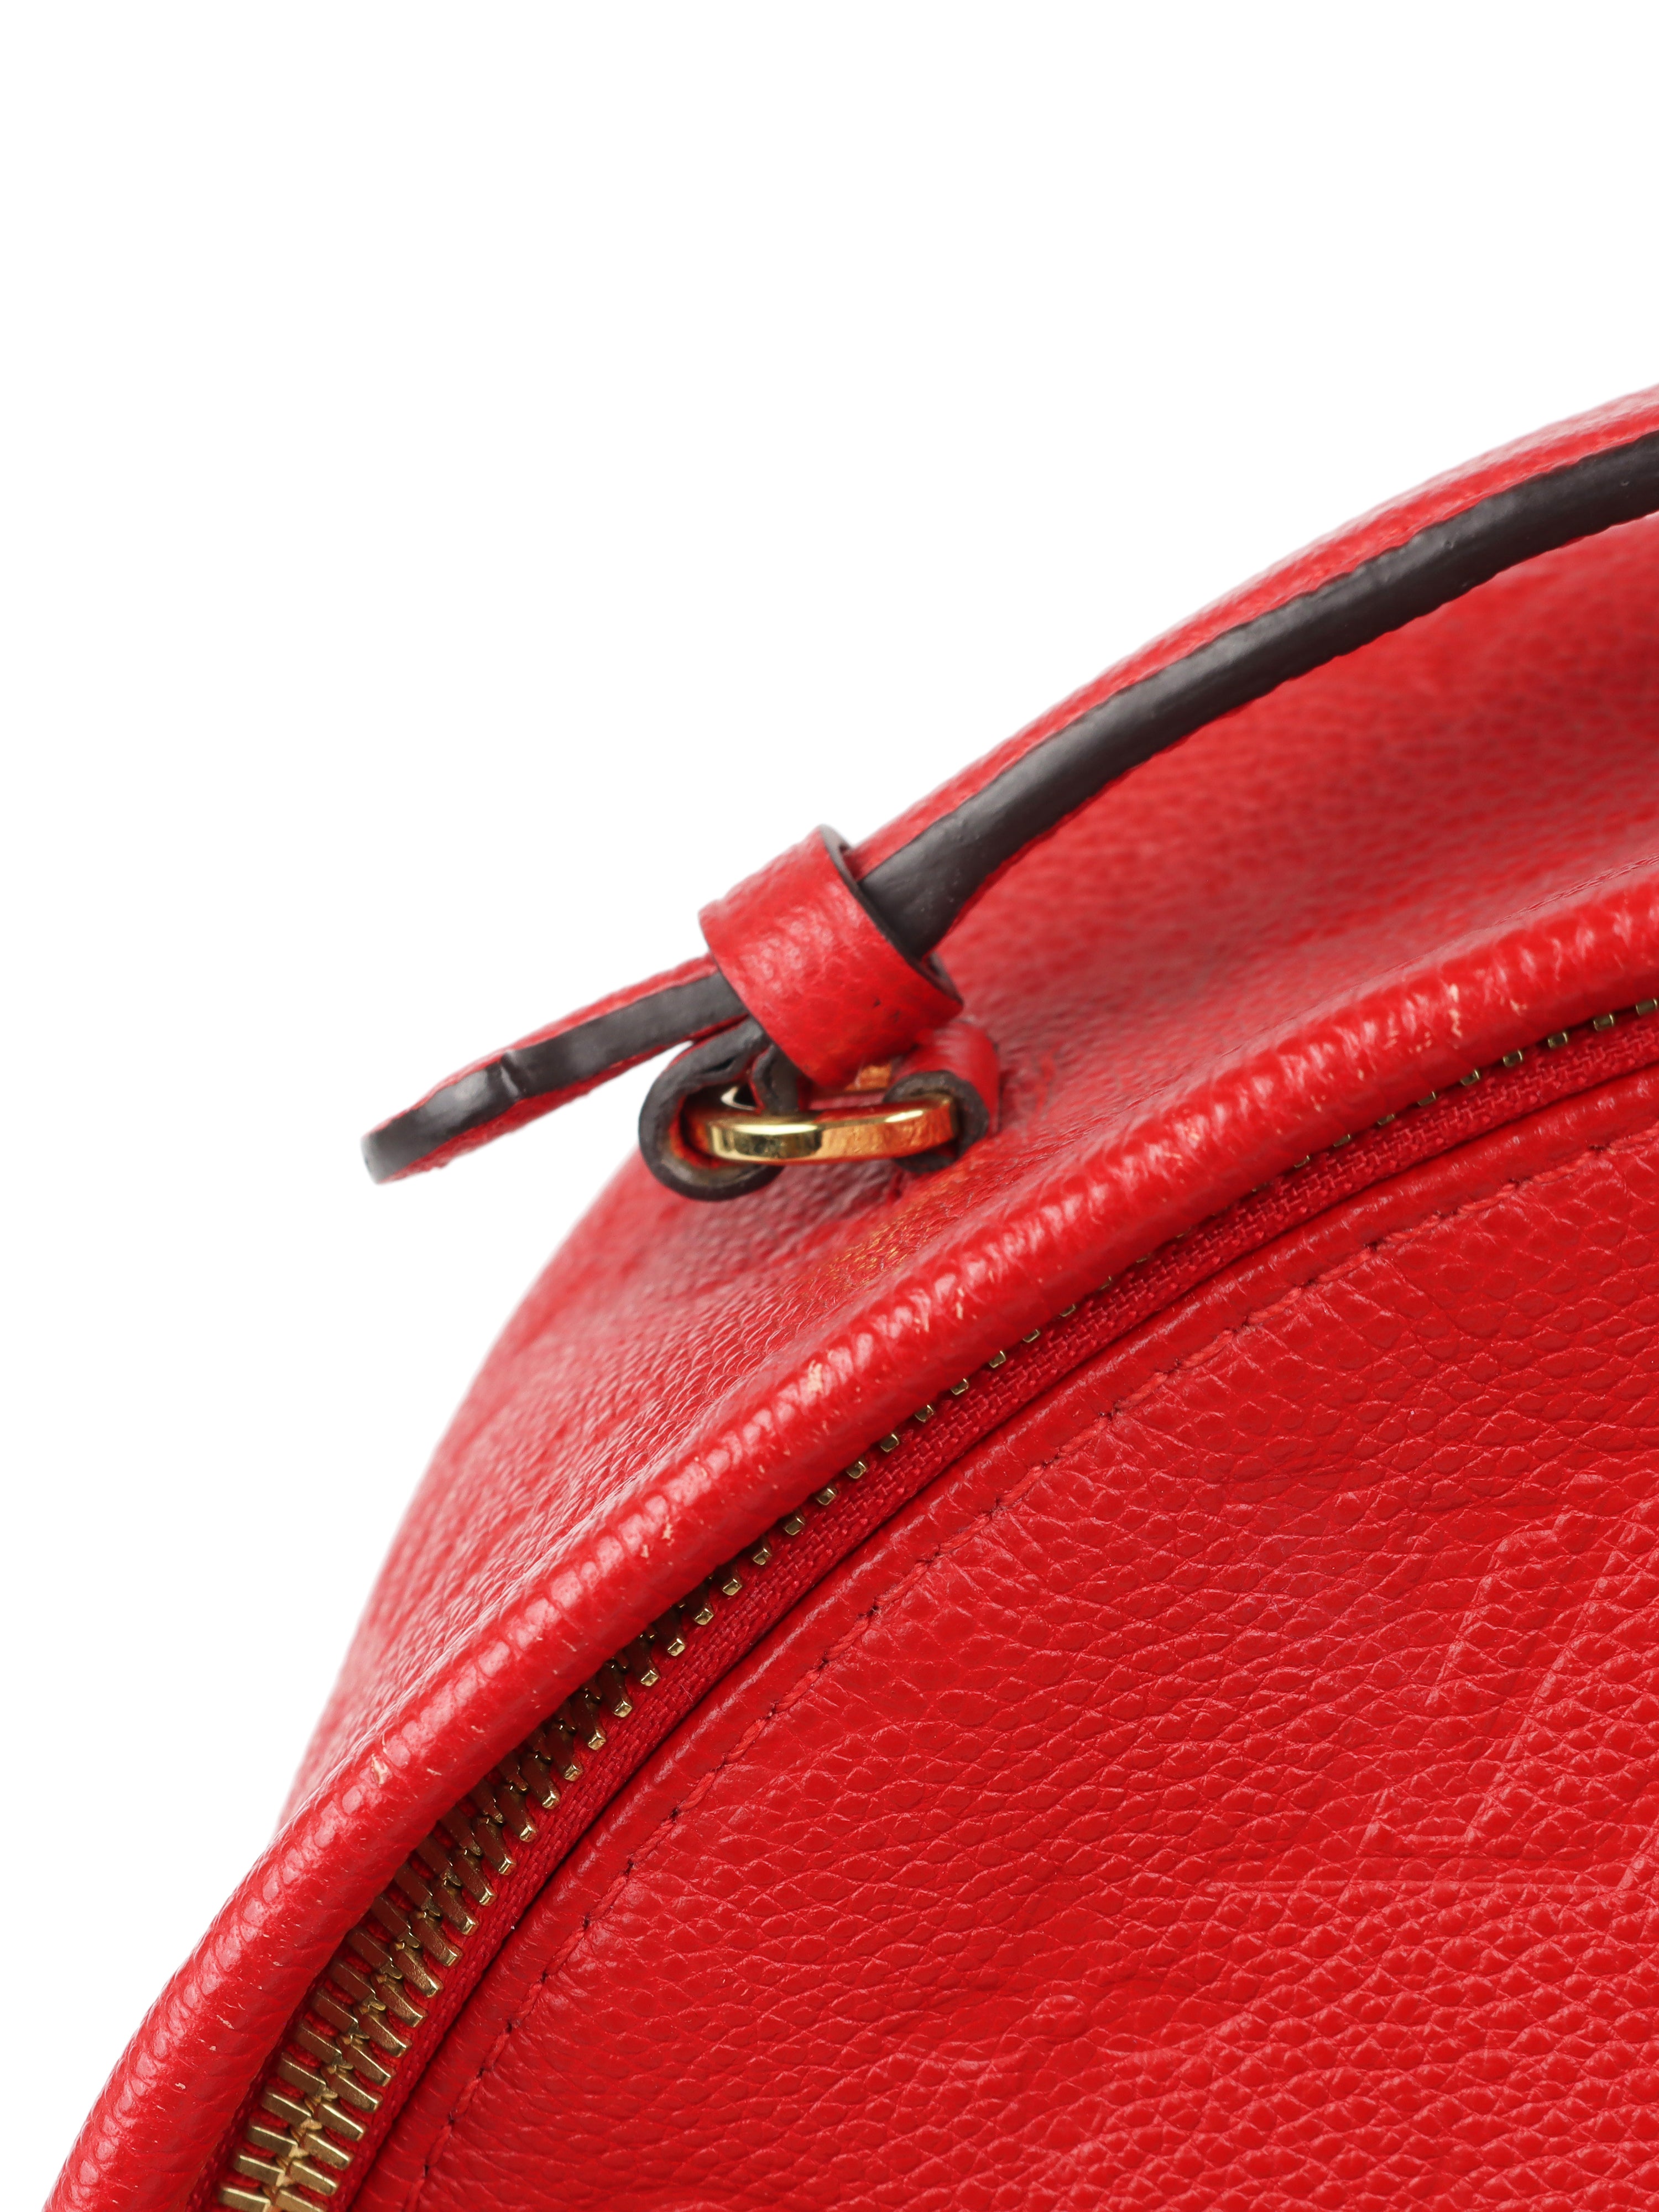 Louis Vuitton Red Sorbonne Backpack – Votre Luxe